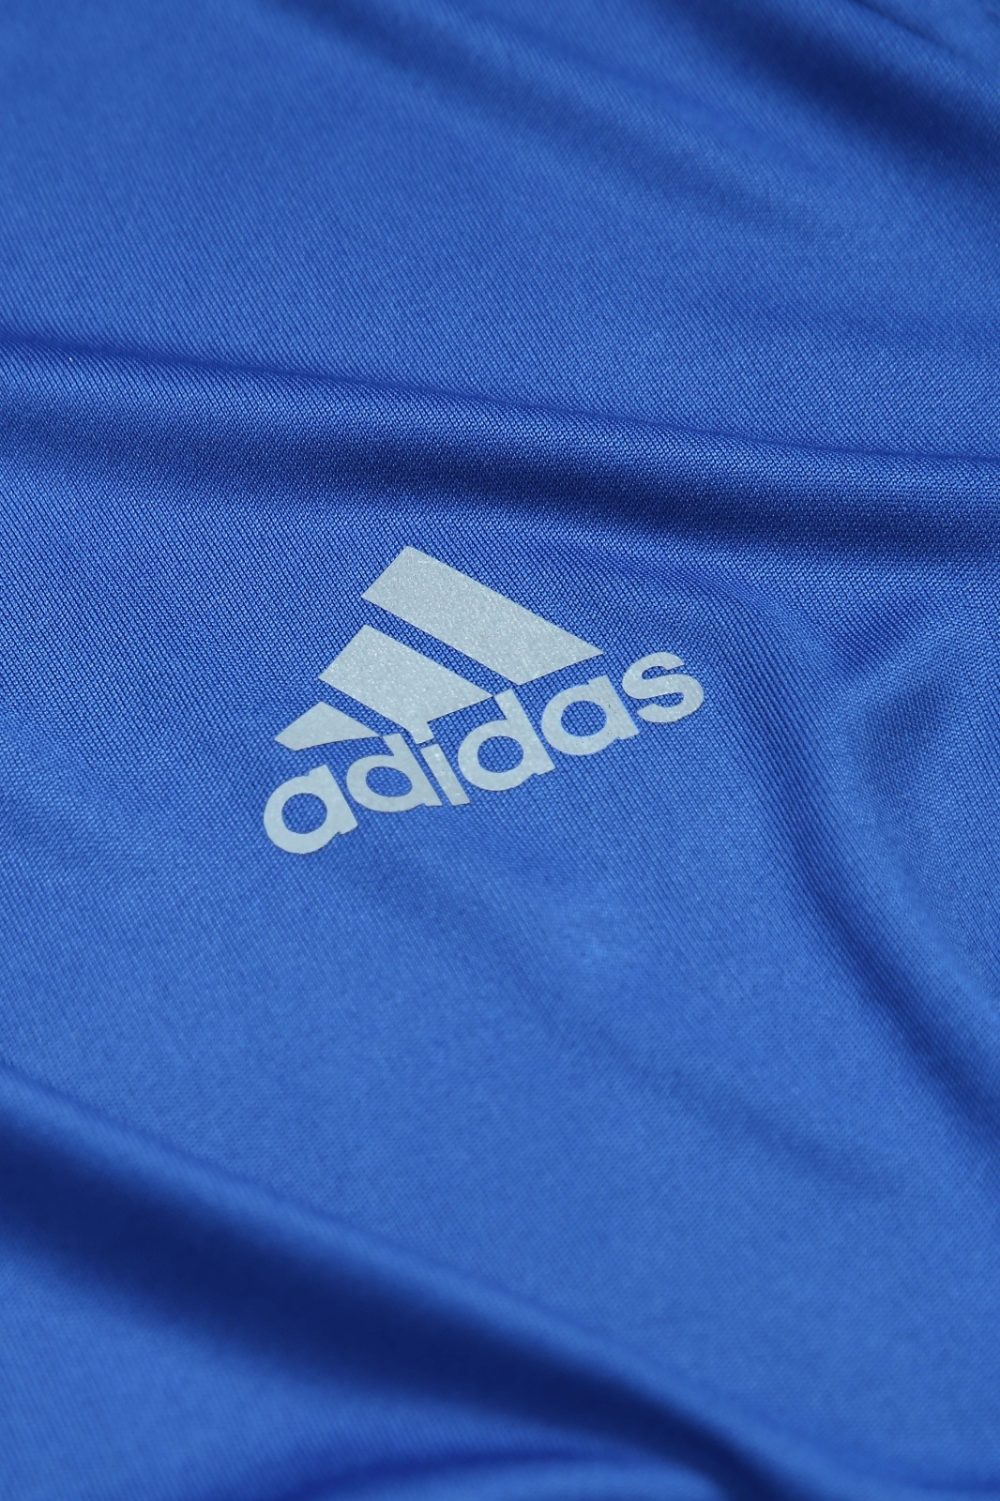 Adidas Basic Sports T Shirt – Royal Blue